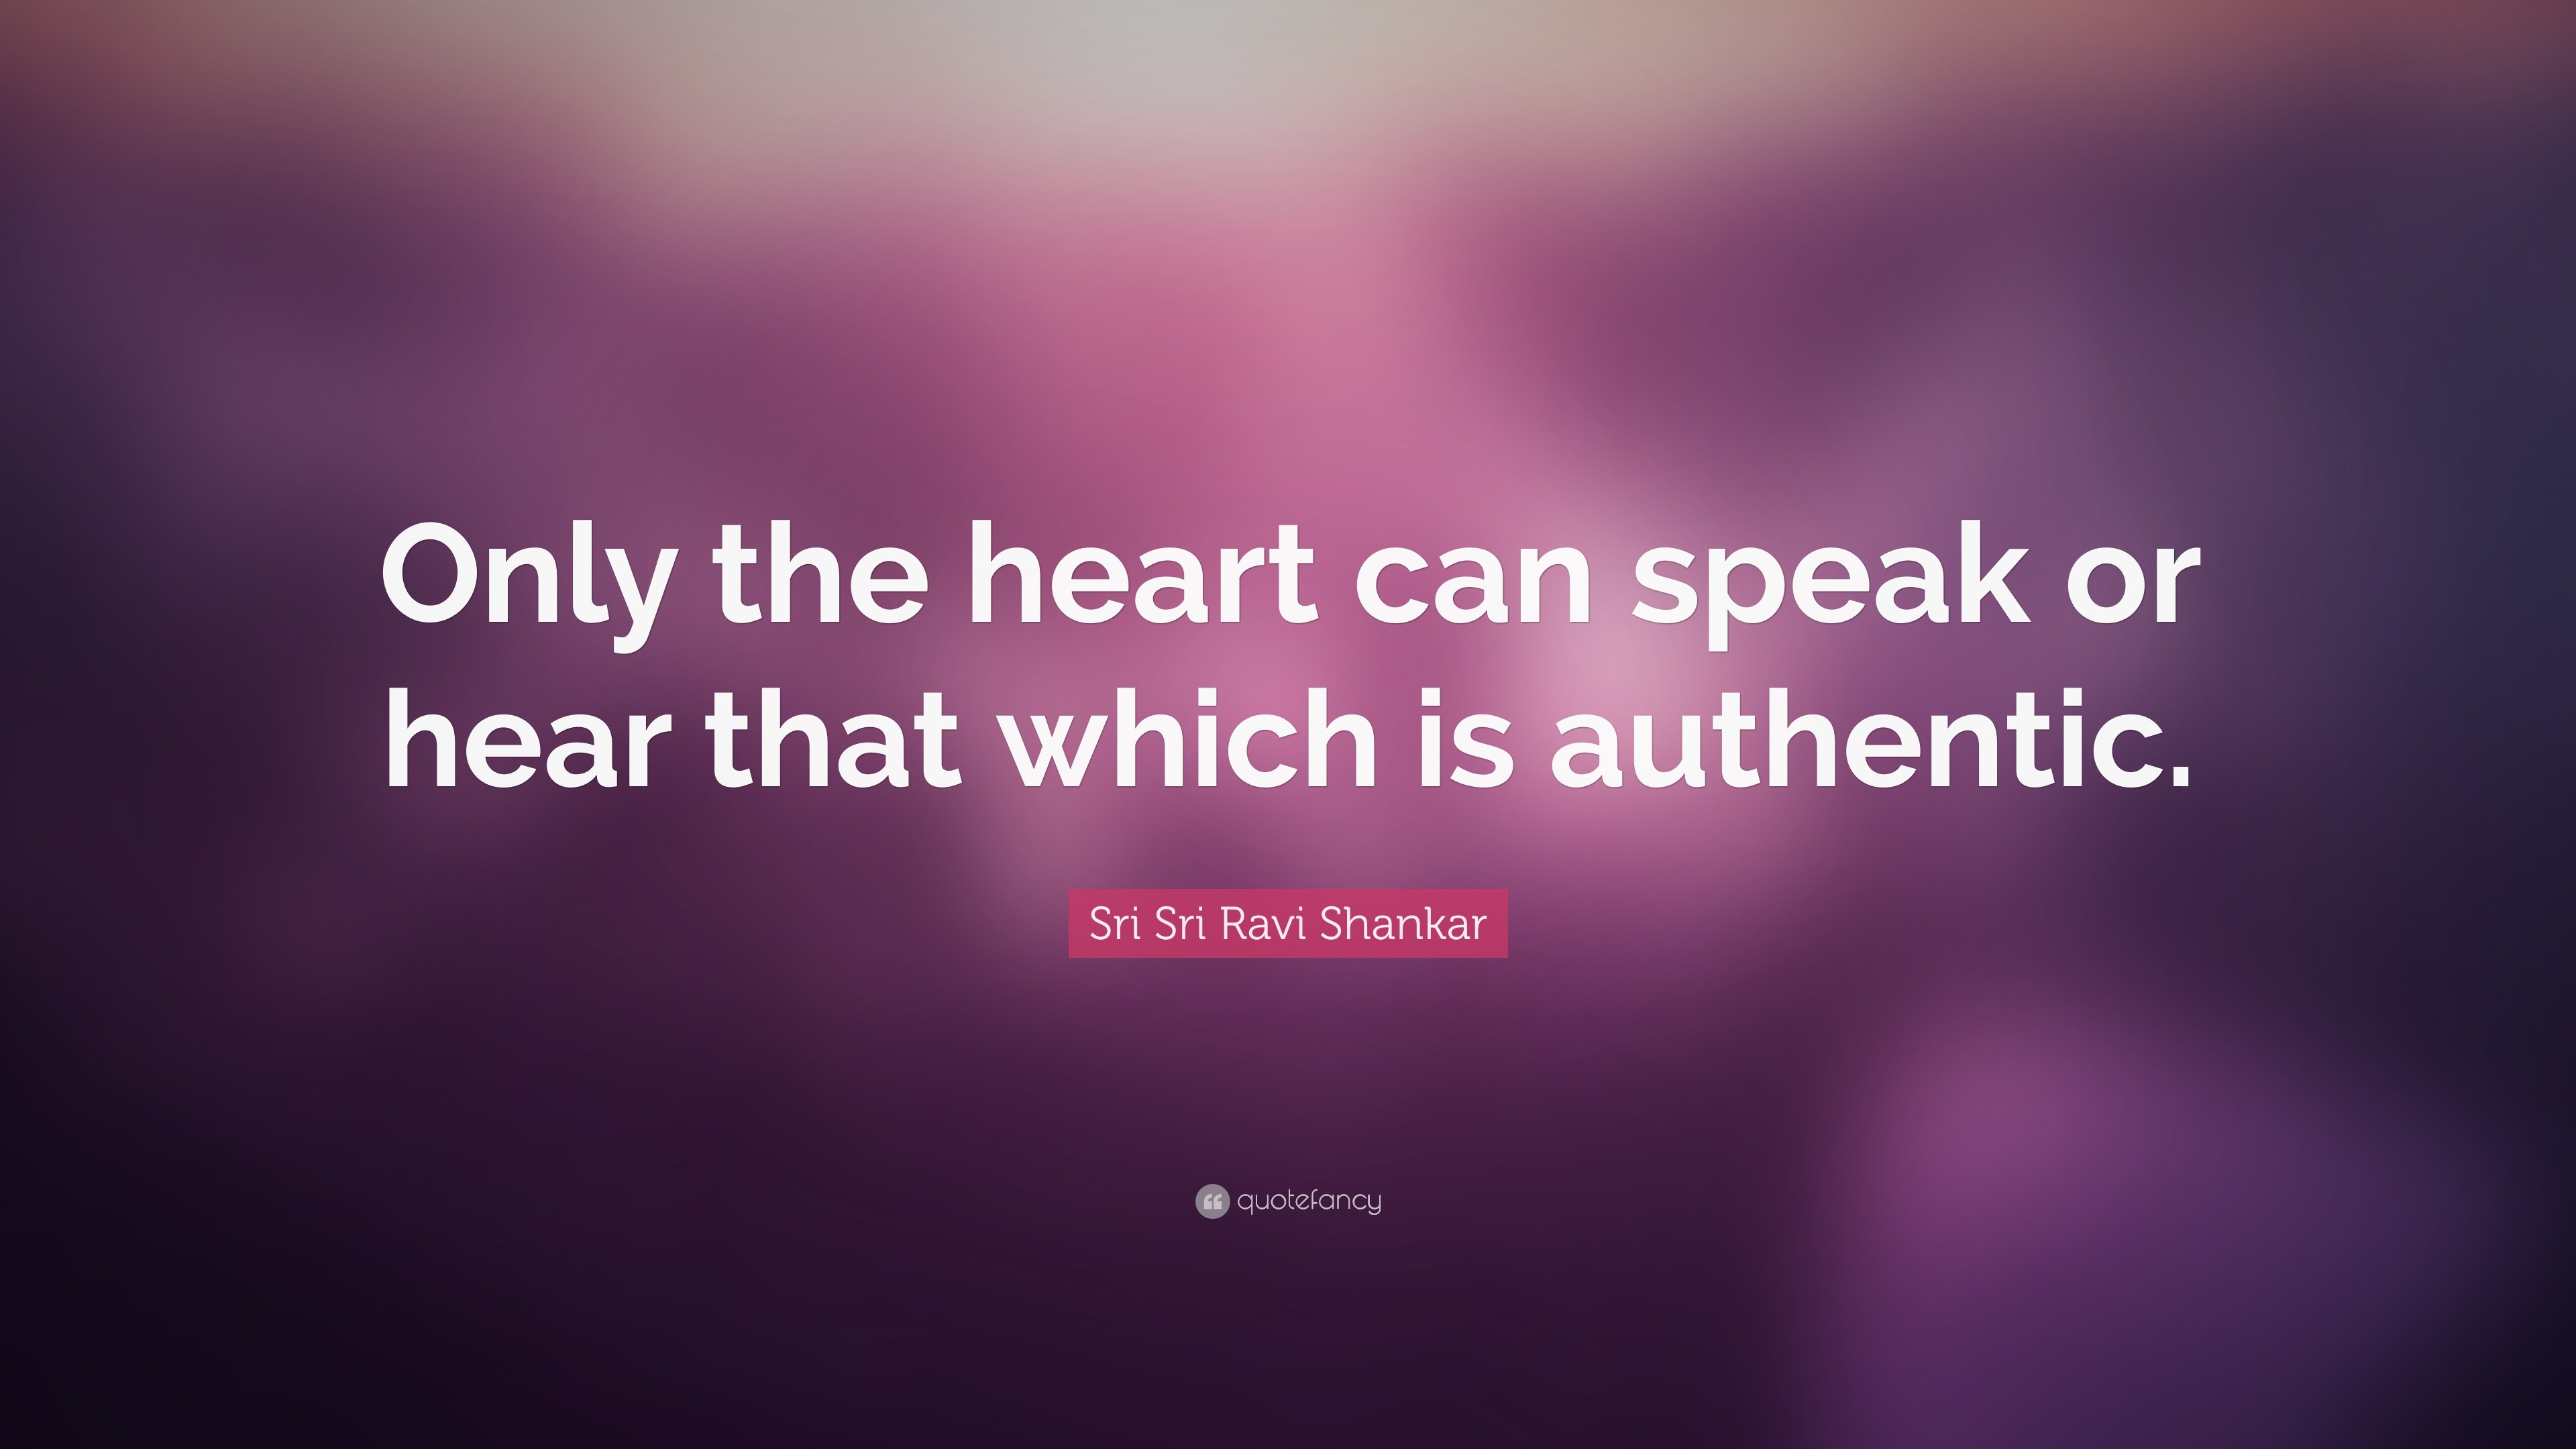 Sri Sri Ravi Shankar Quote: “Only the heart can speak or hear that ...